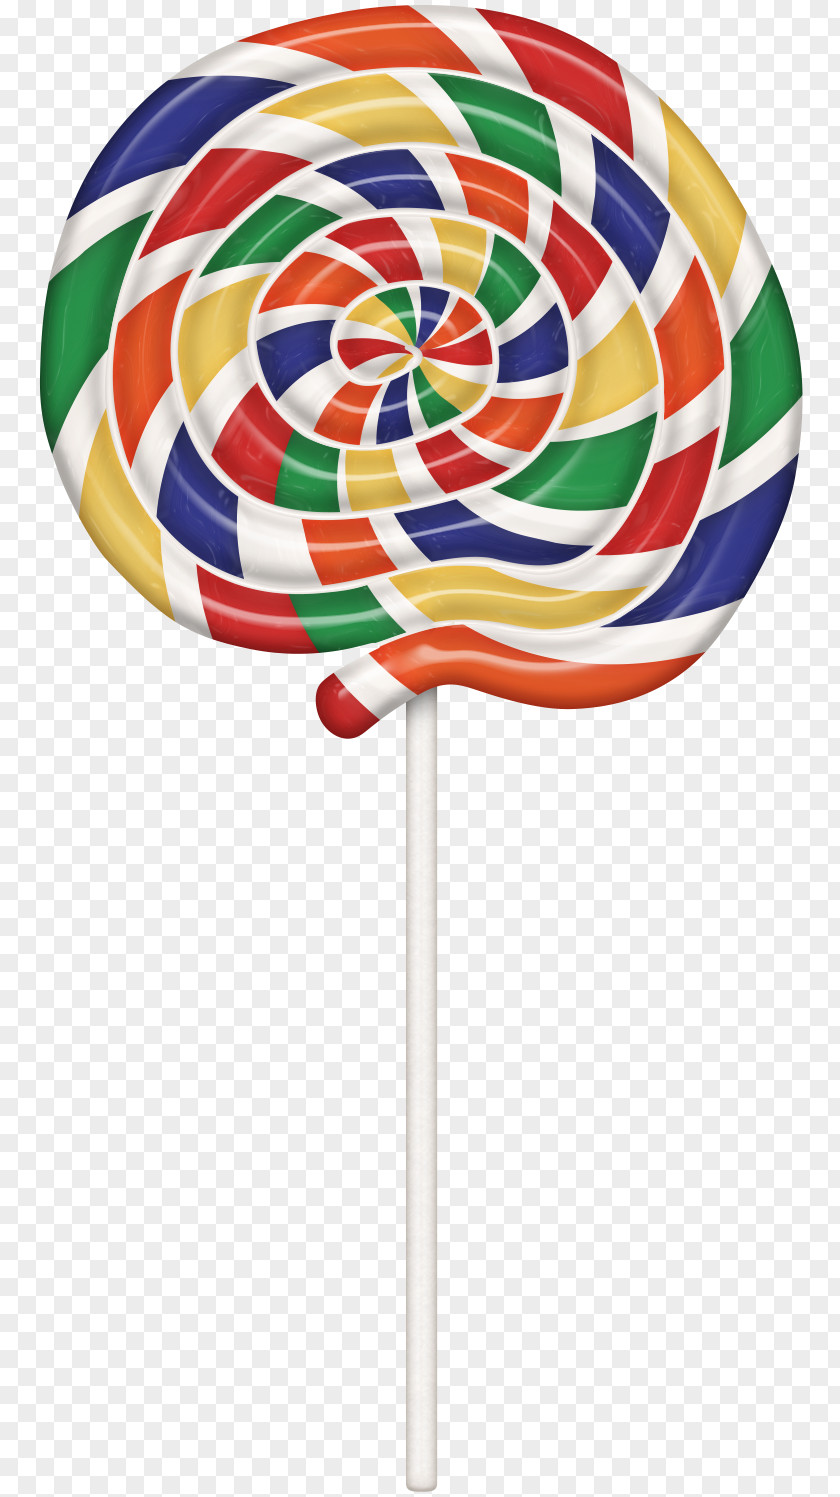 Lollipop Candy Sugar PNG